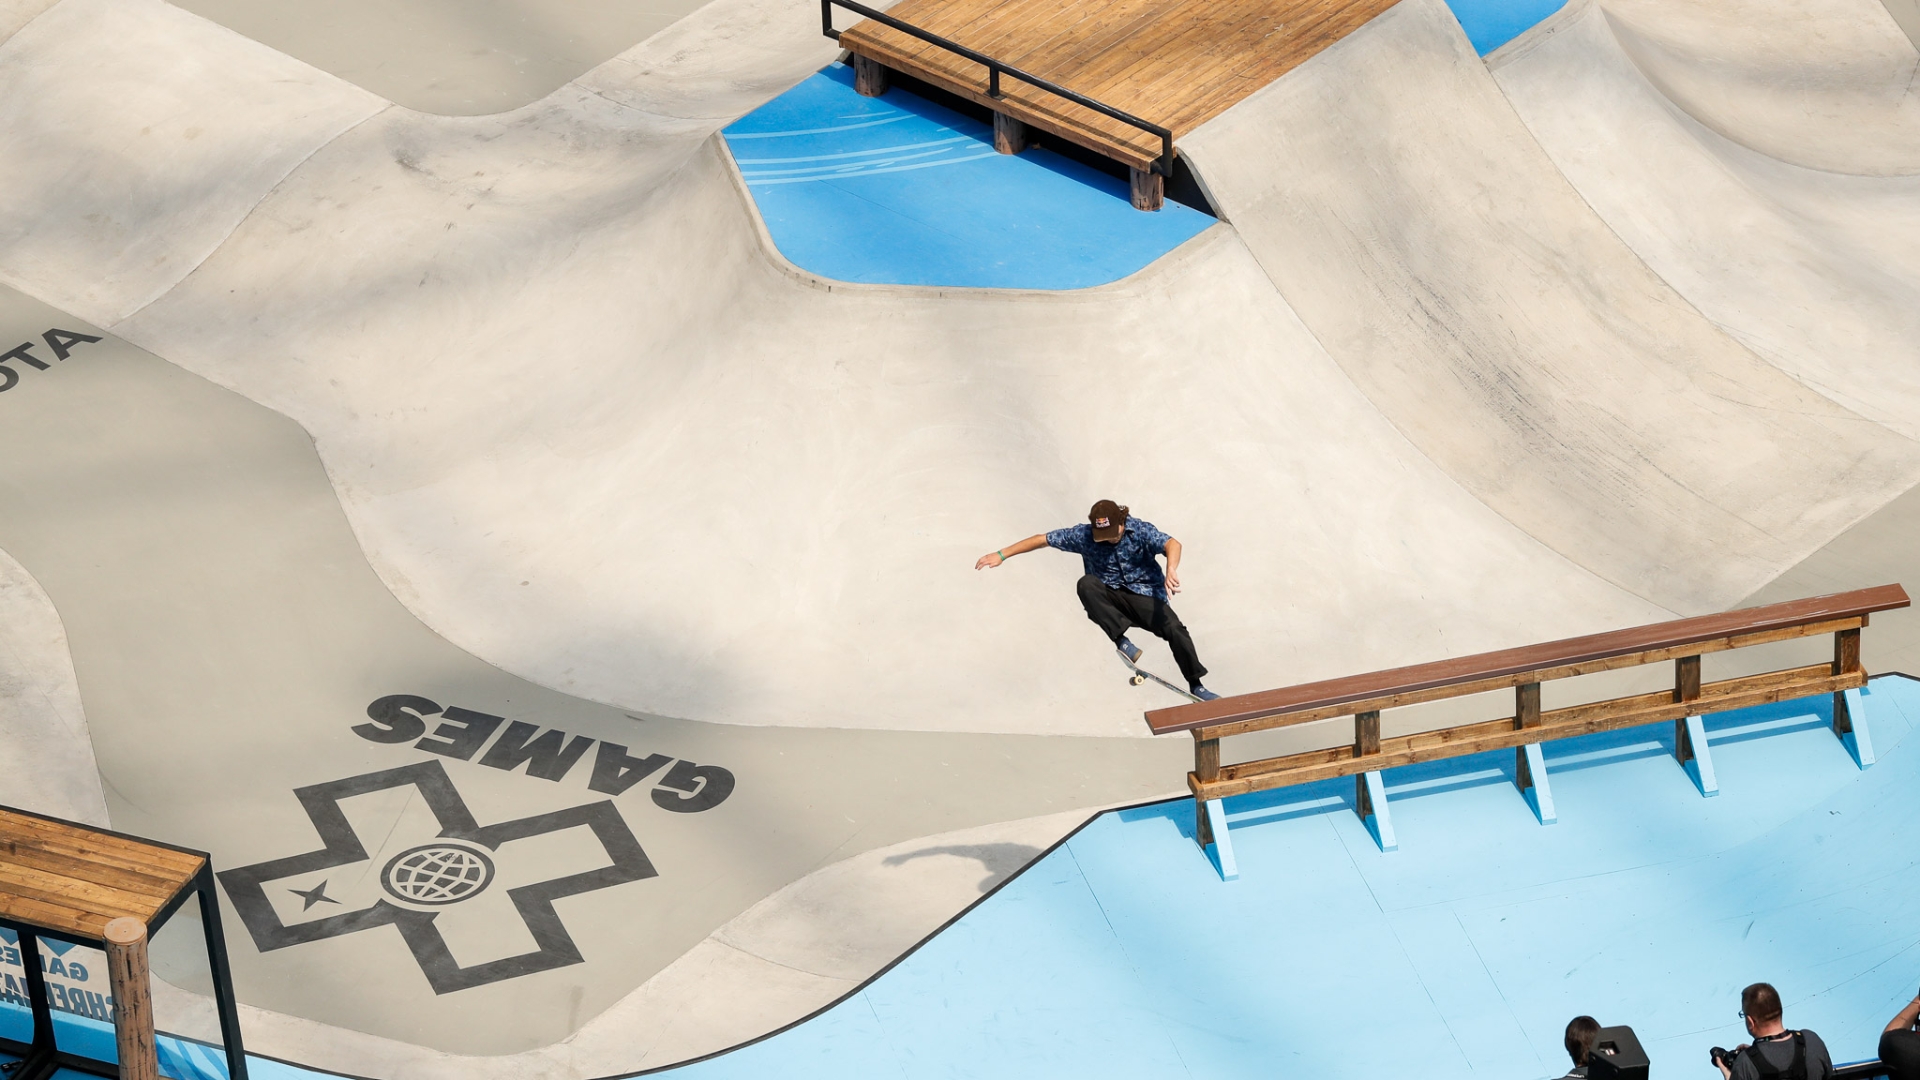 Alex Sorgente wins X Games Skateboard Park gold